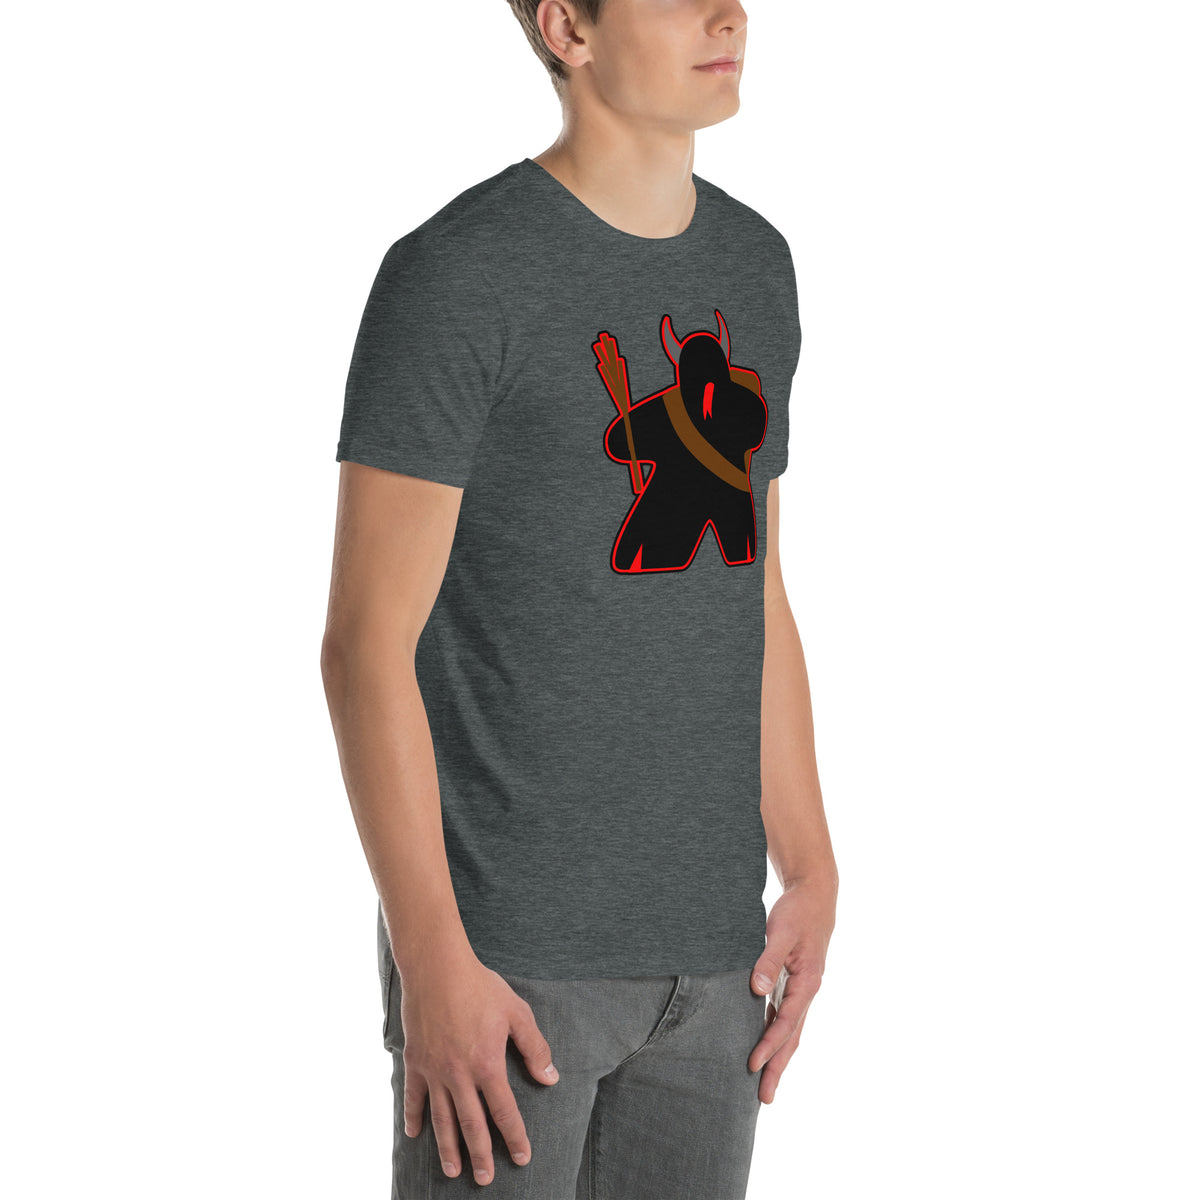 Krampus Meeple on Gray T-Shirt Worn by Model